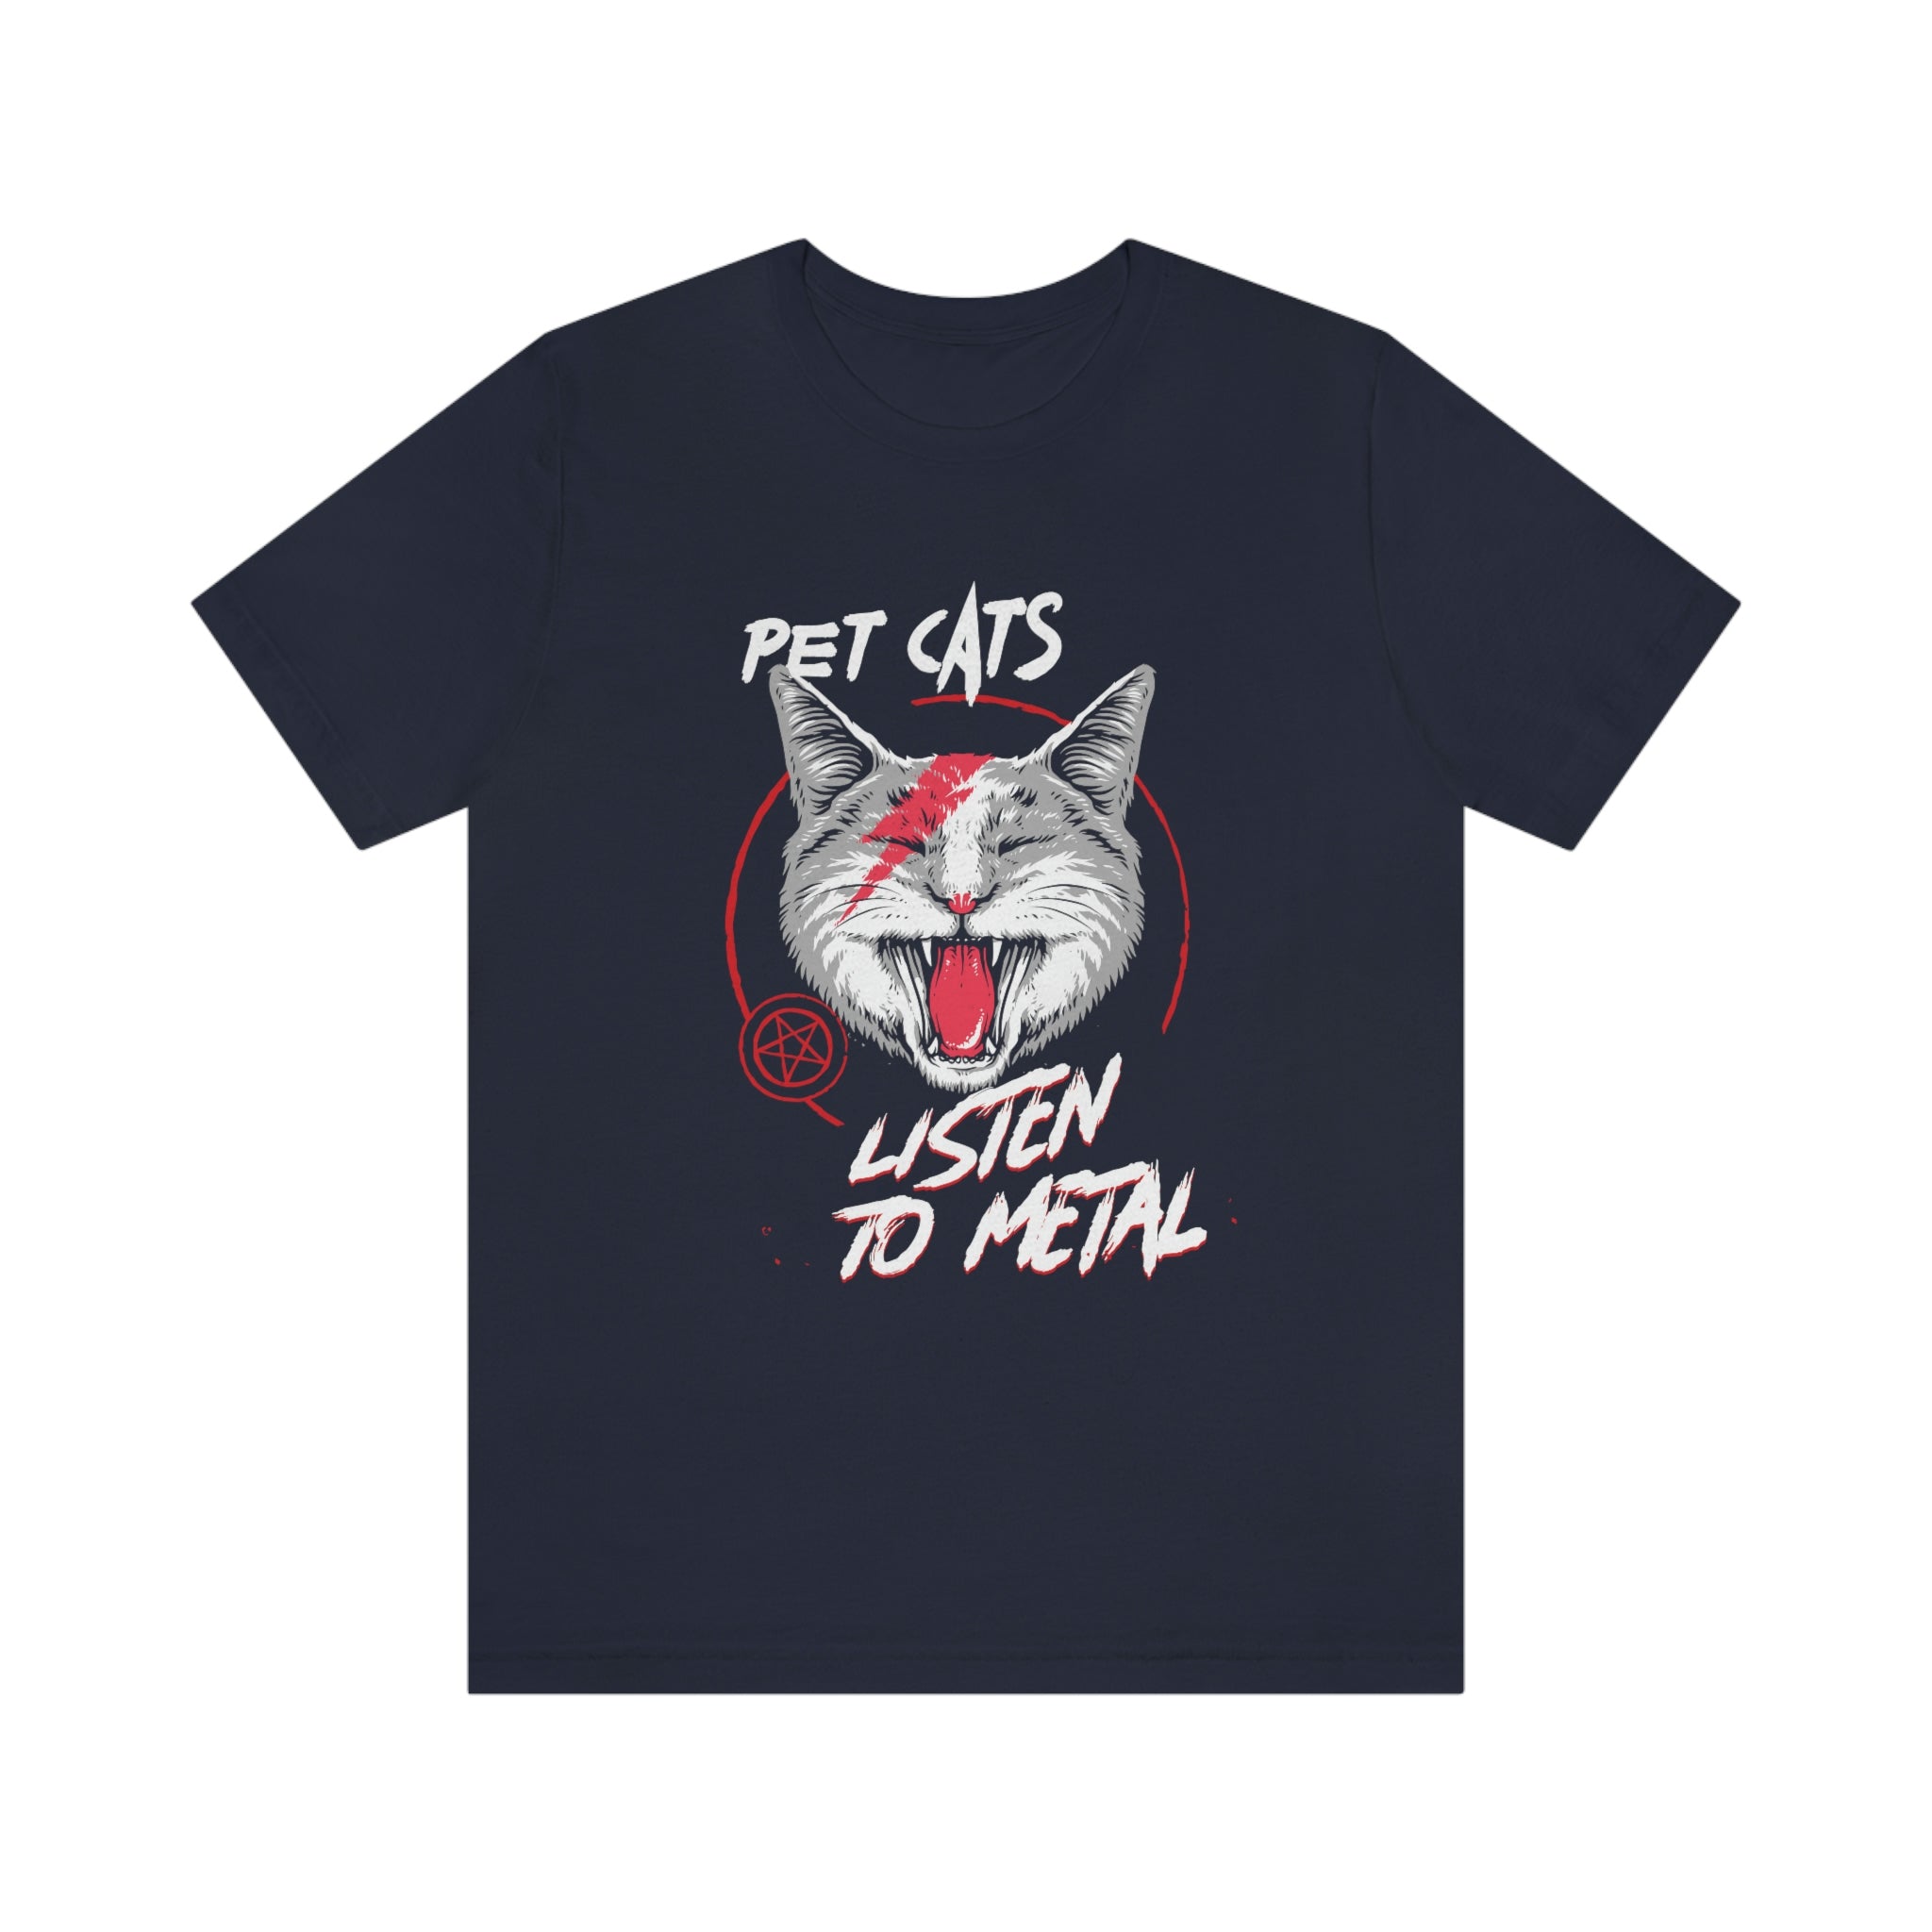 Pet kittens, Listen to Metal : Unisex 100% Premium Cotton, T-Shirt by Bella+Canvas -  A gentler design from our “pet cats” metal t-shirt line.